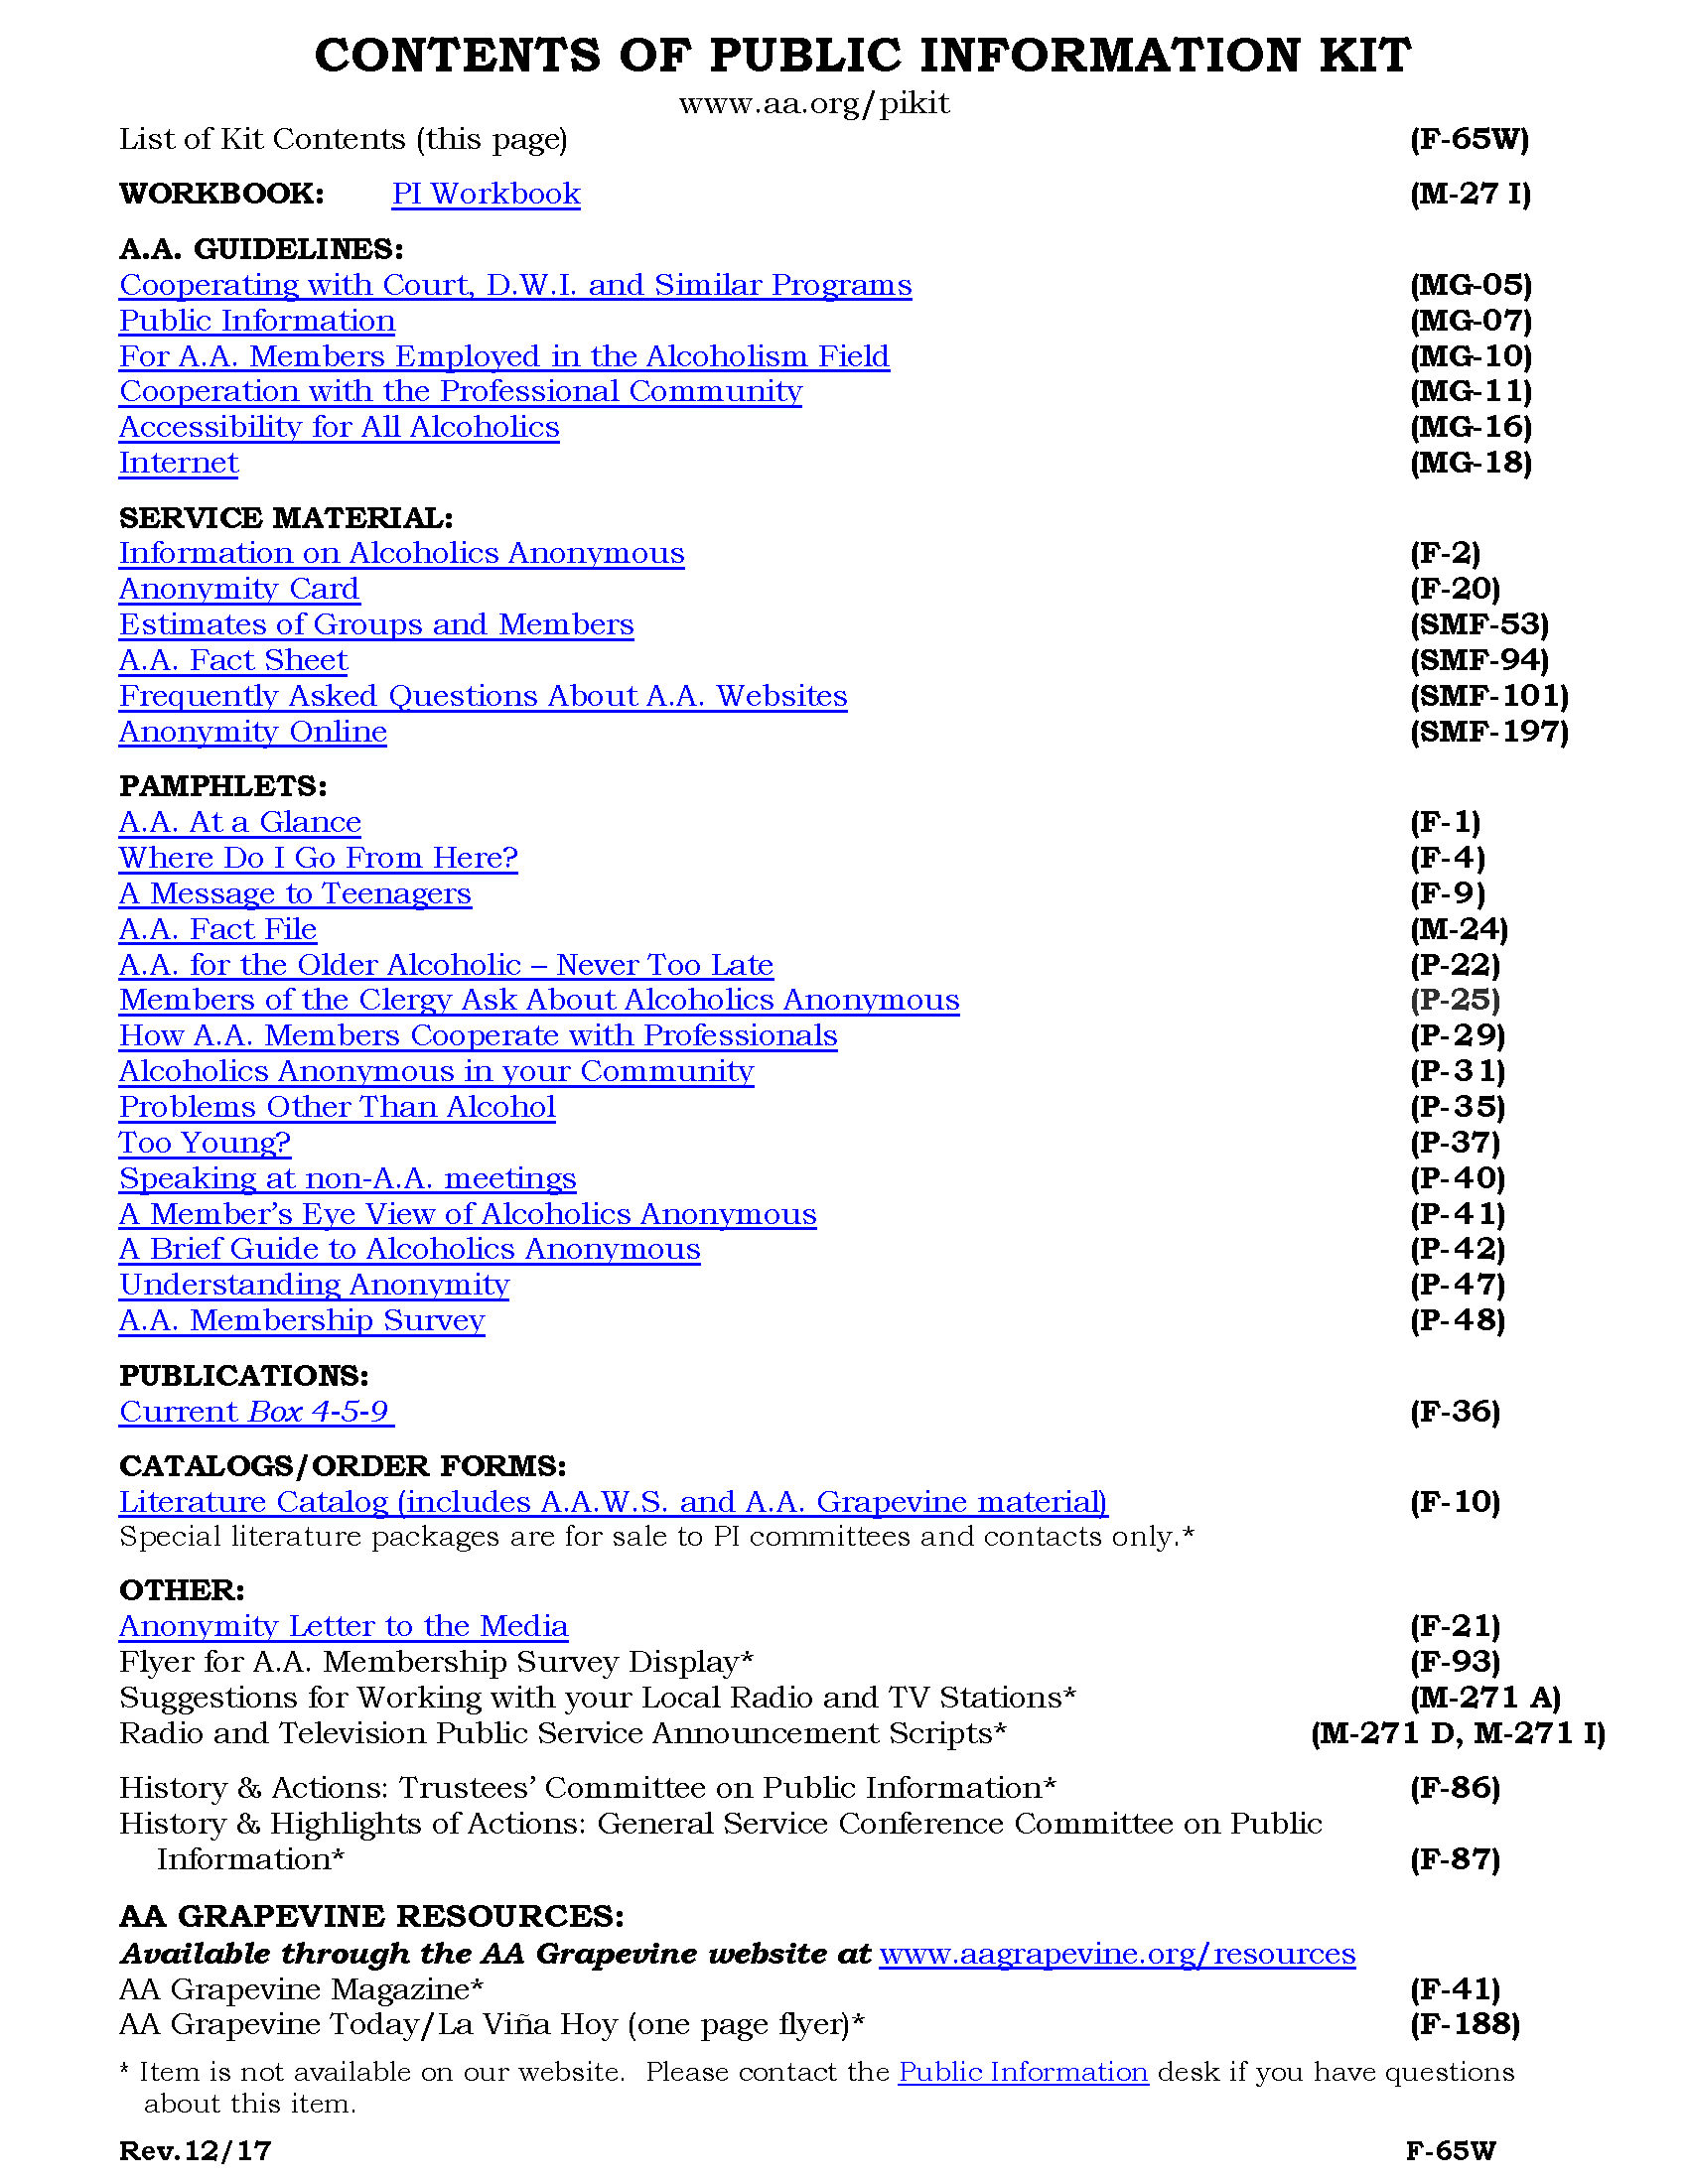 Contents of Public Information Kit List